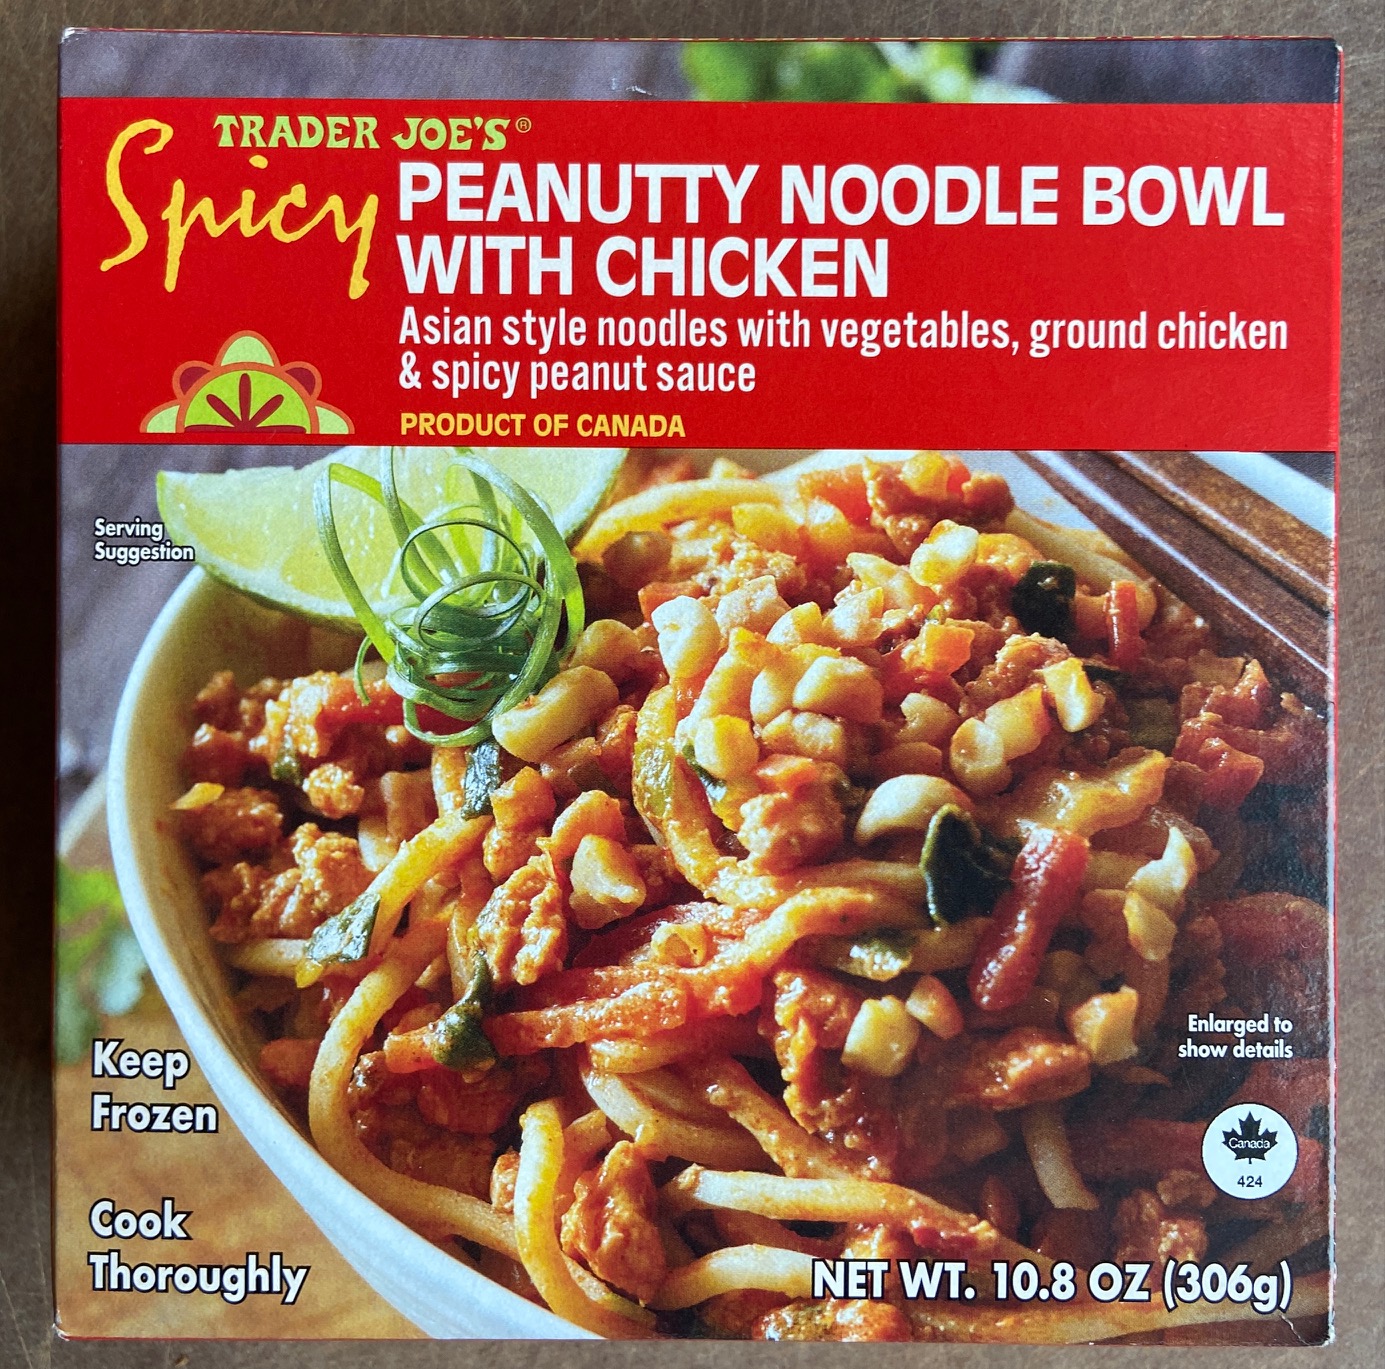 Trader Joe's Spicy Peanutty Noodle Bowl